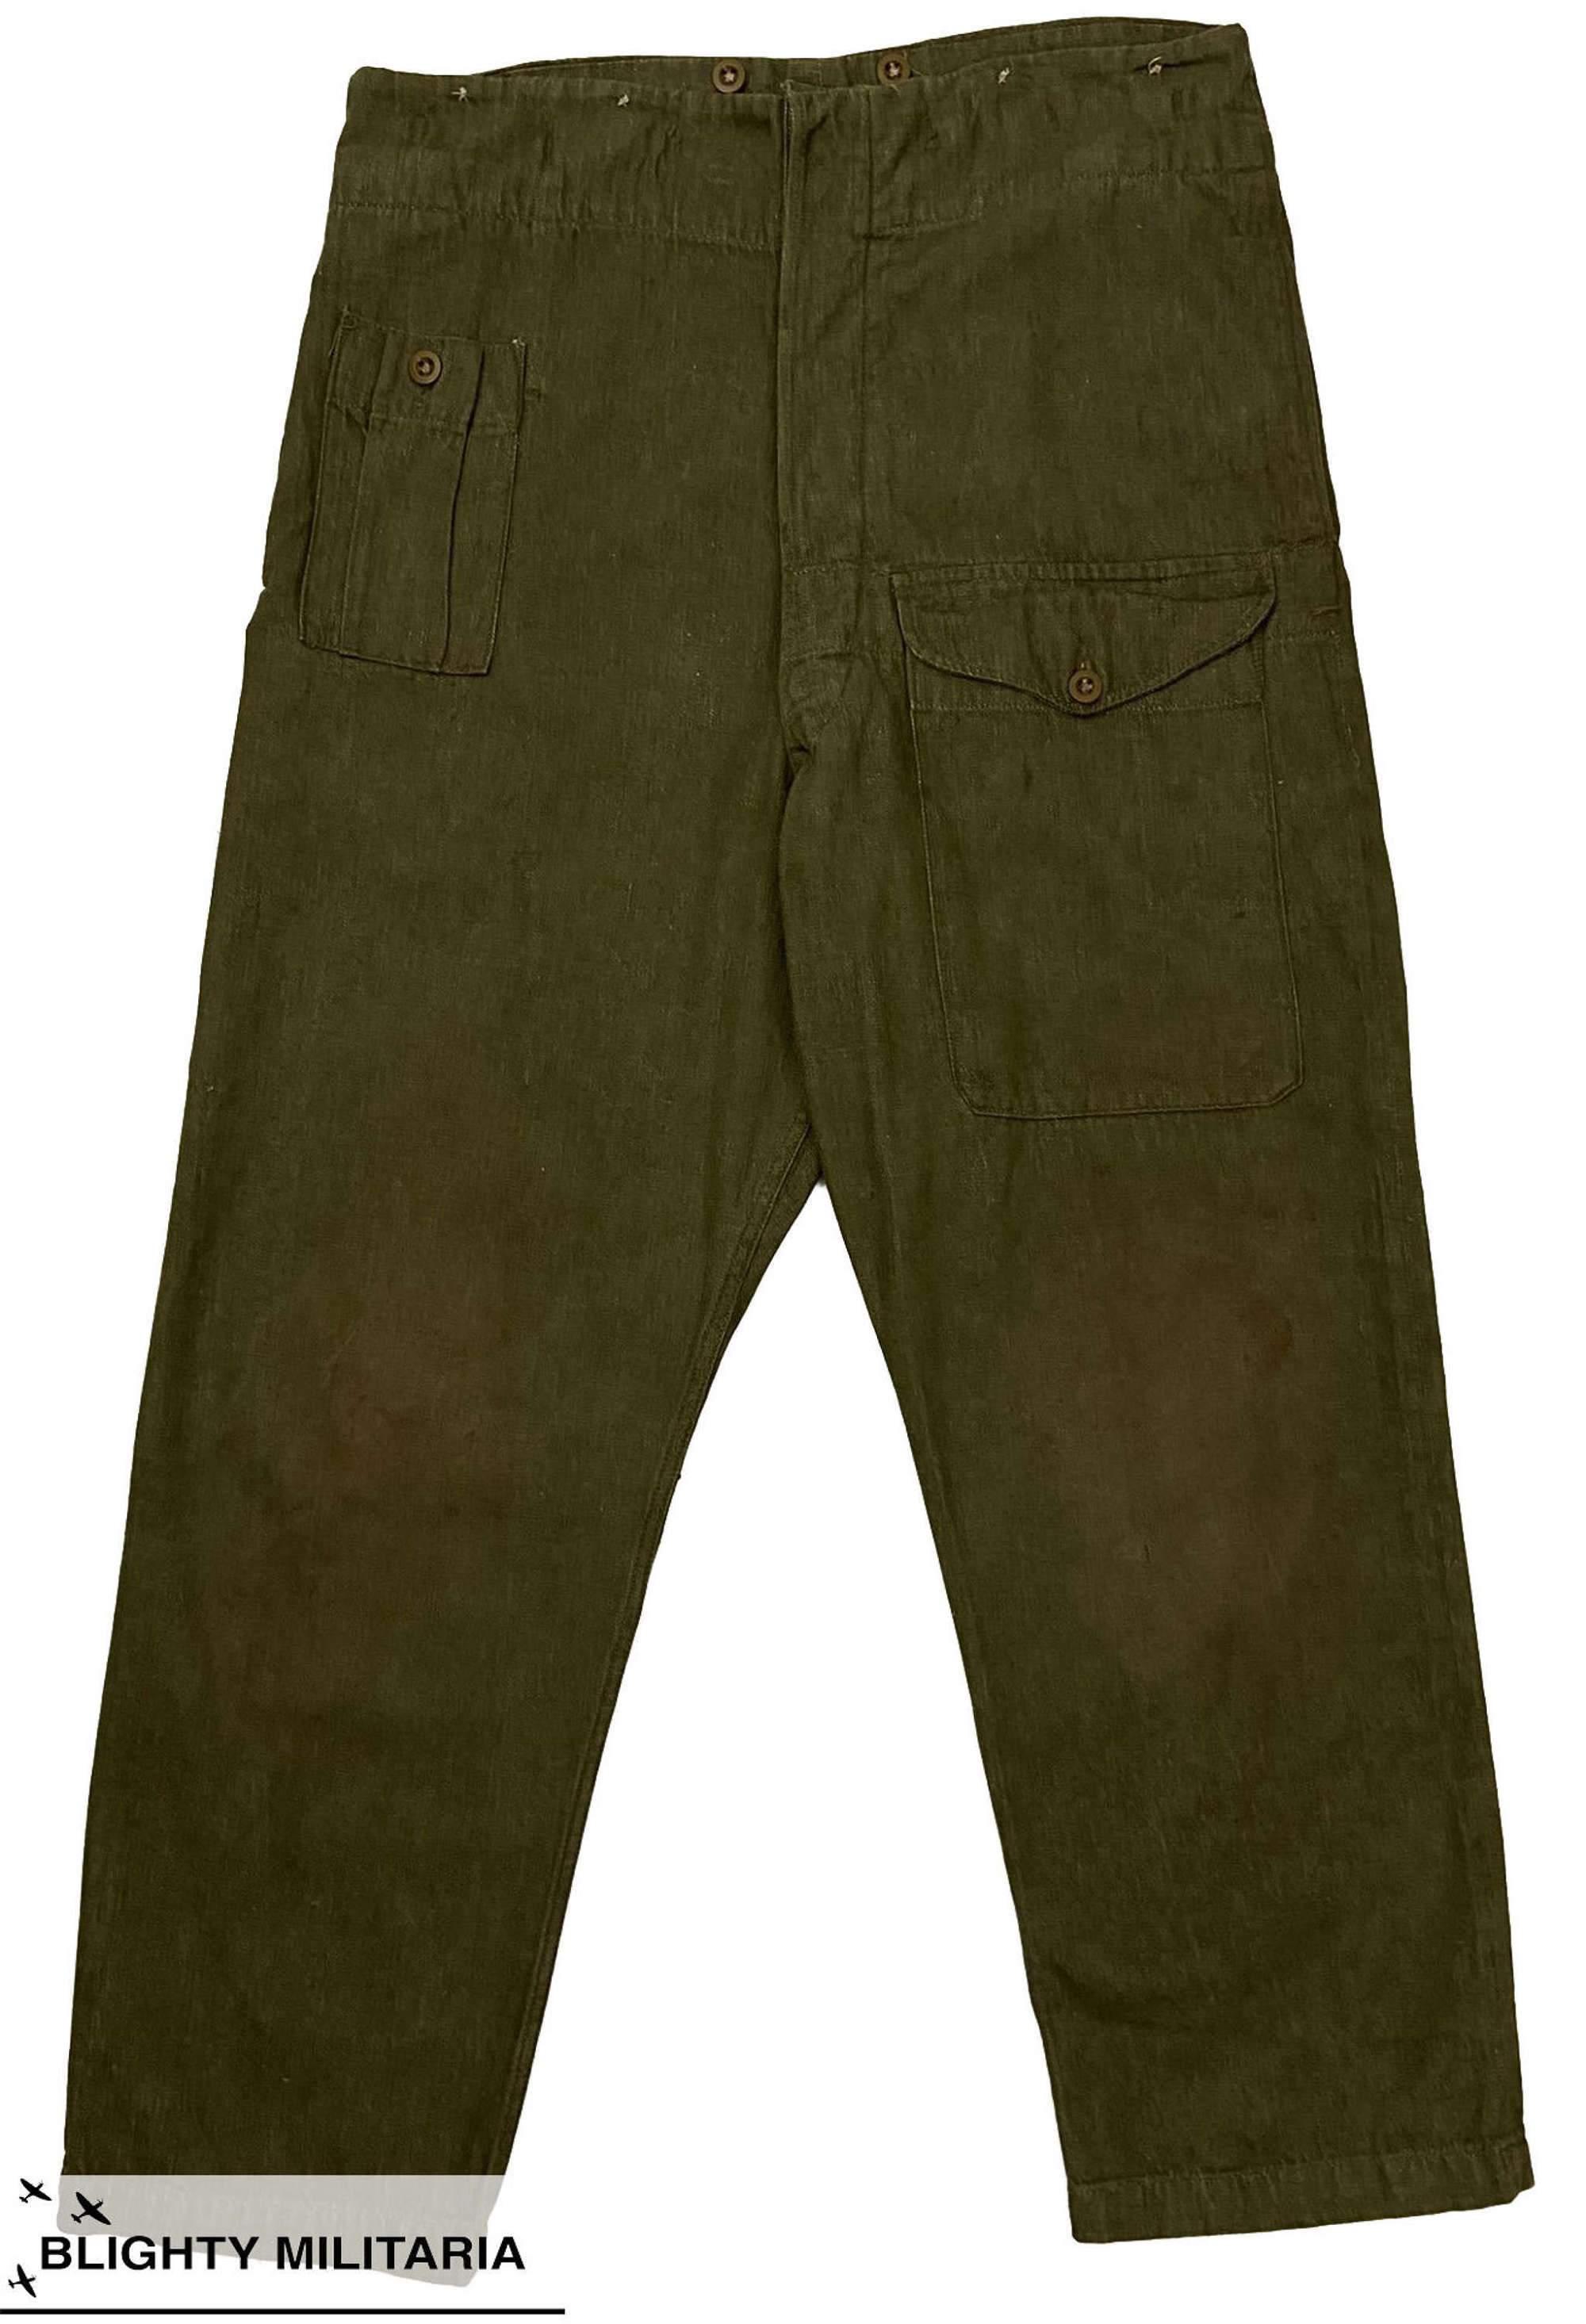 Original 1955 Dated British Army Denim Battledress Trousers - Size 6